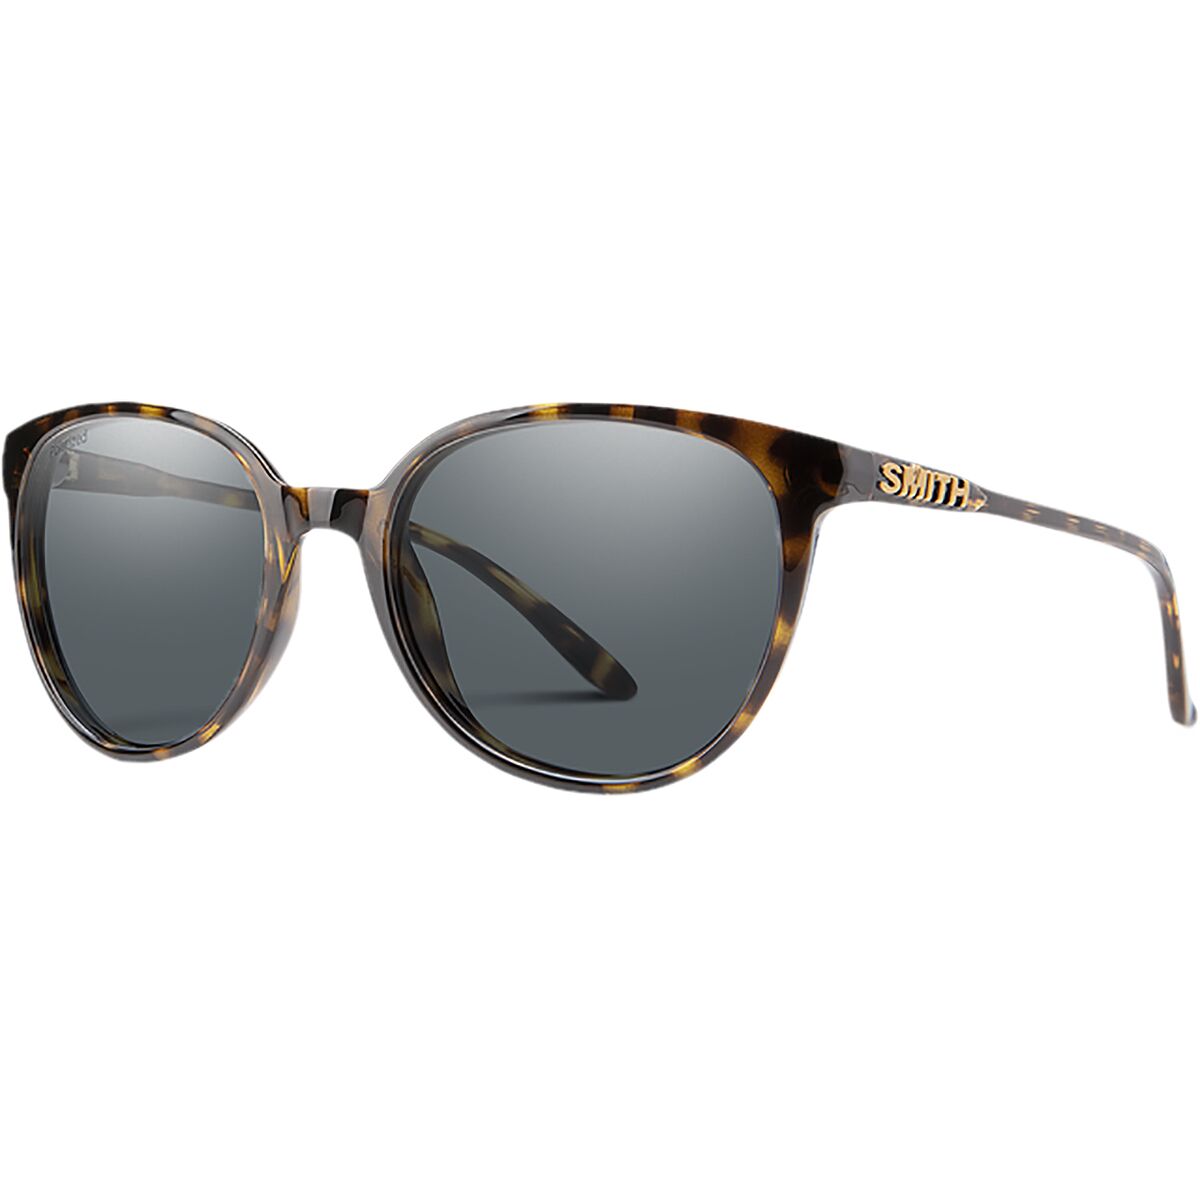 Smith Cheetah Polarized Sunglasses - Women's